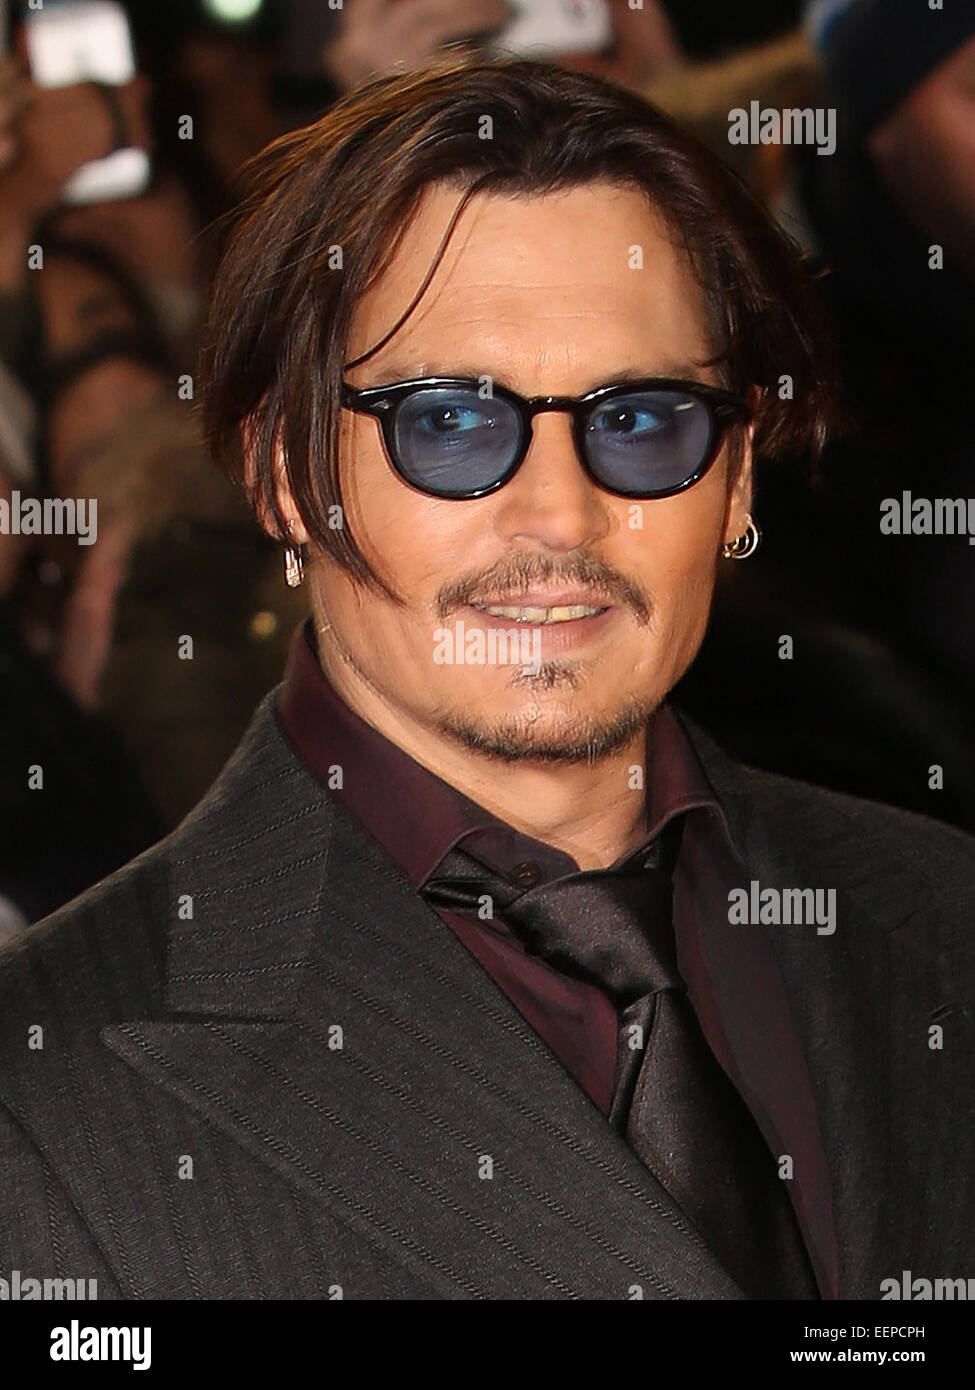 London, UK. 19th Jan, 2015. Johnny Depp attends the UK Premiere of ...